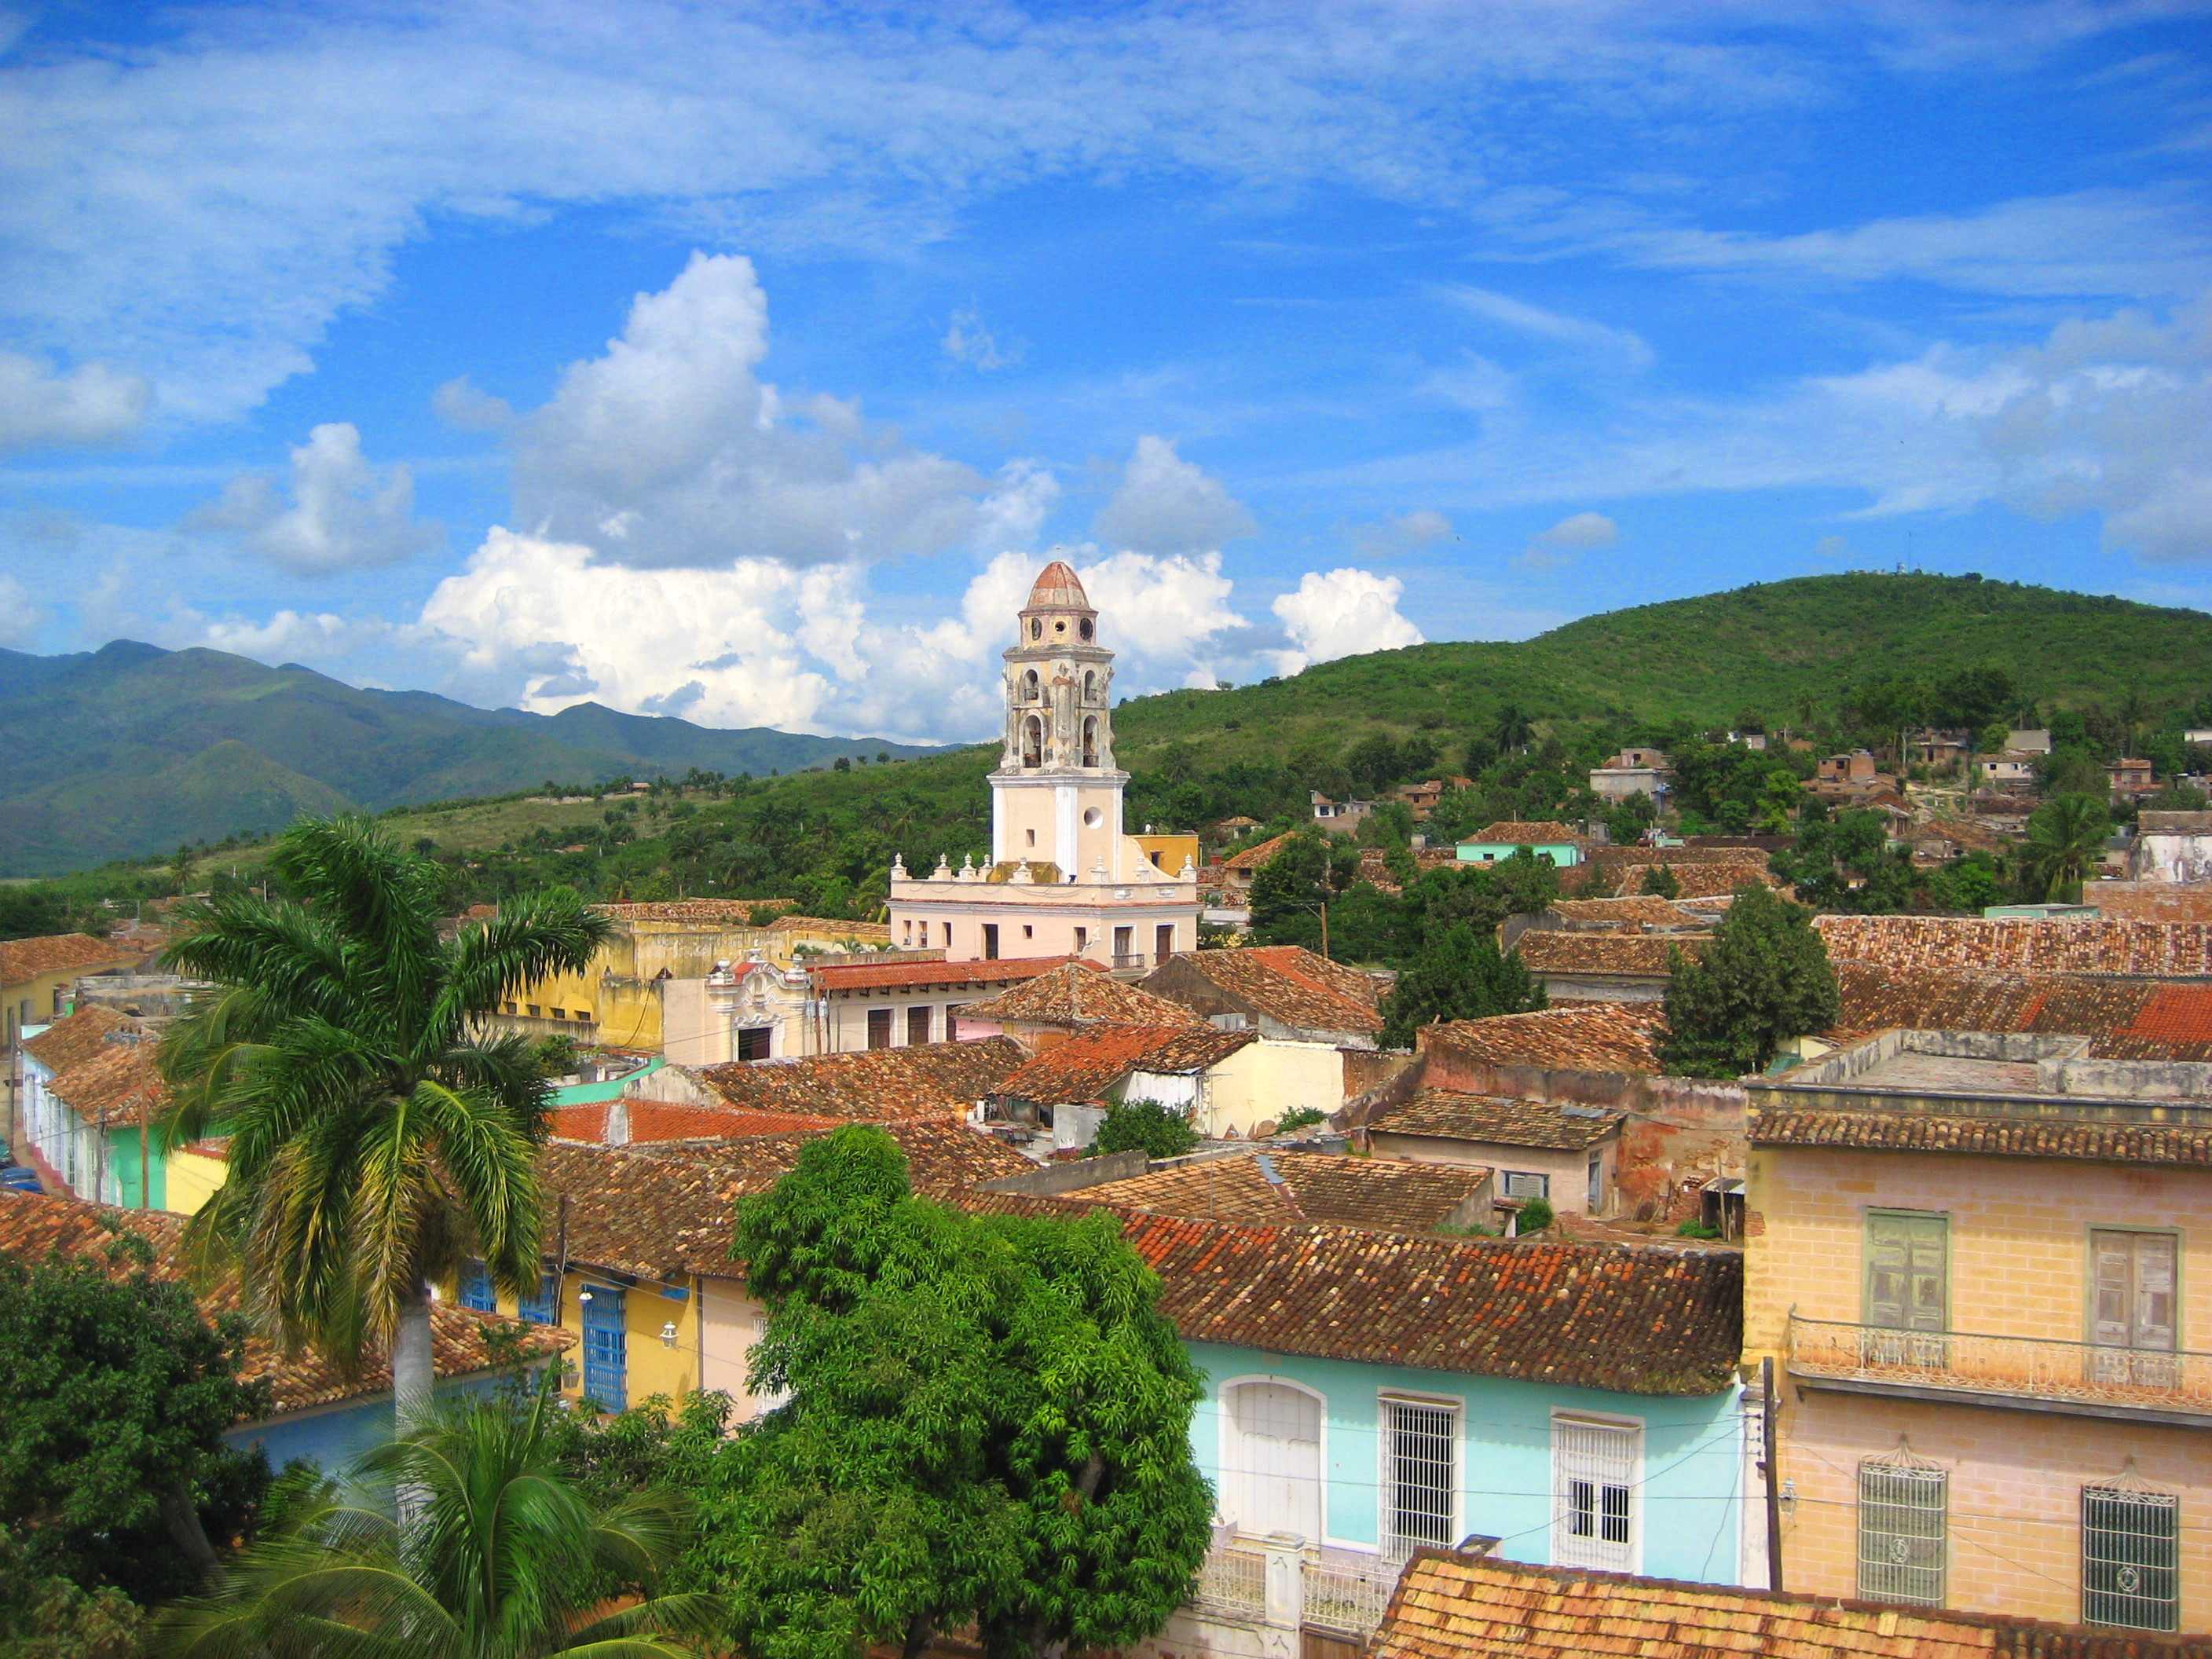 På din reise til Cuba med norsk reiseleder opplever du Trinidad 